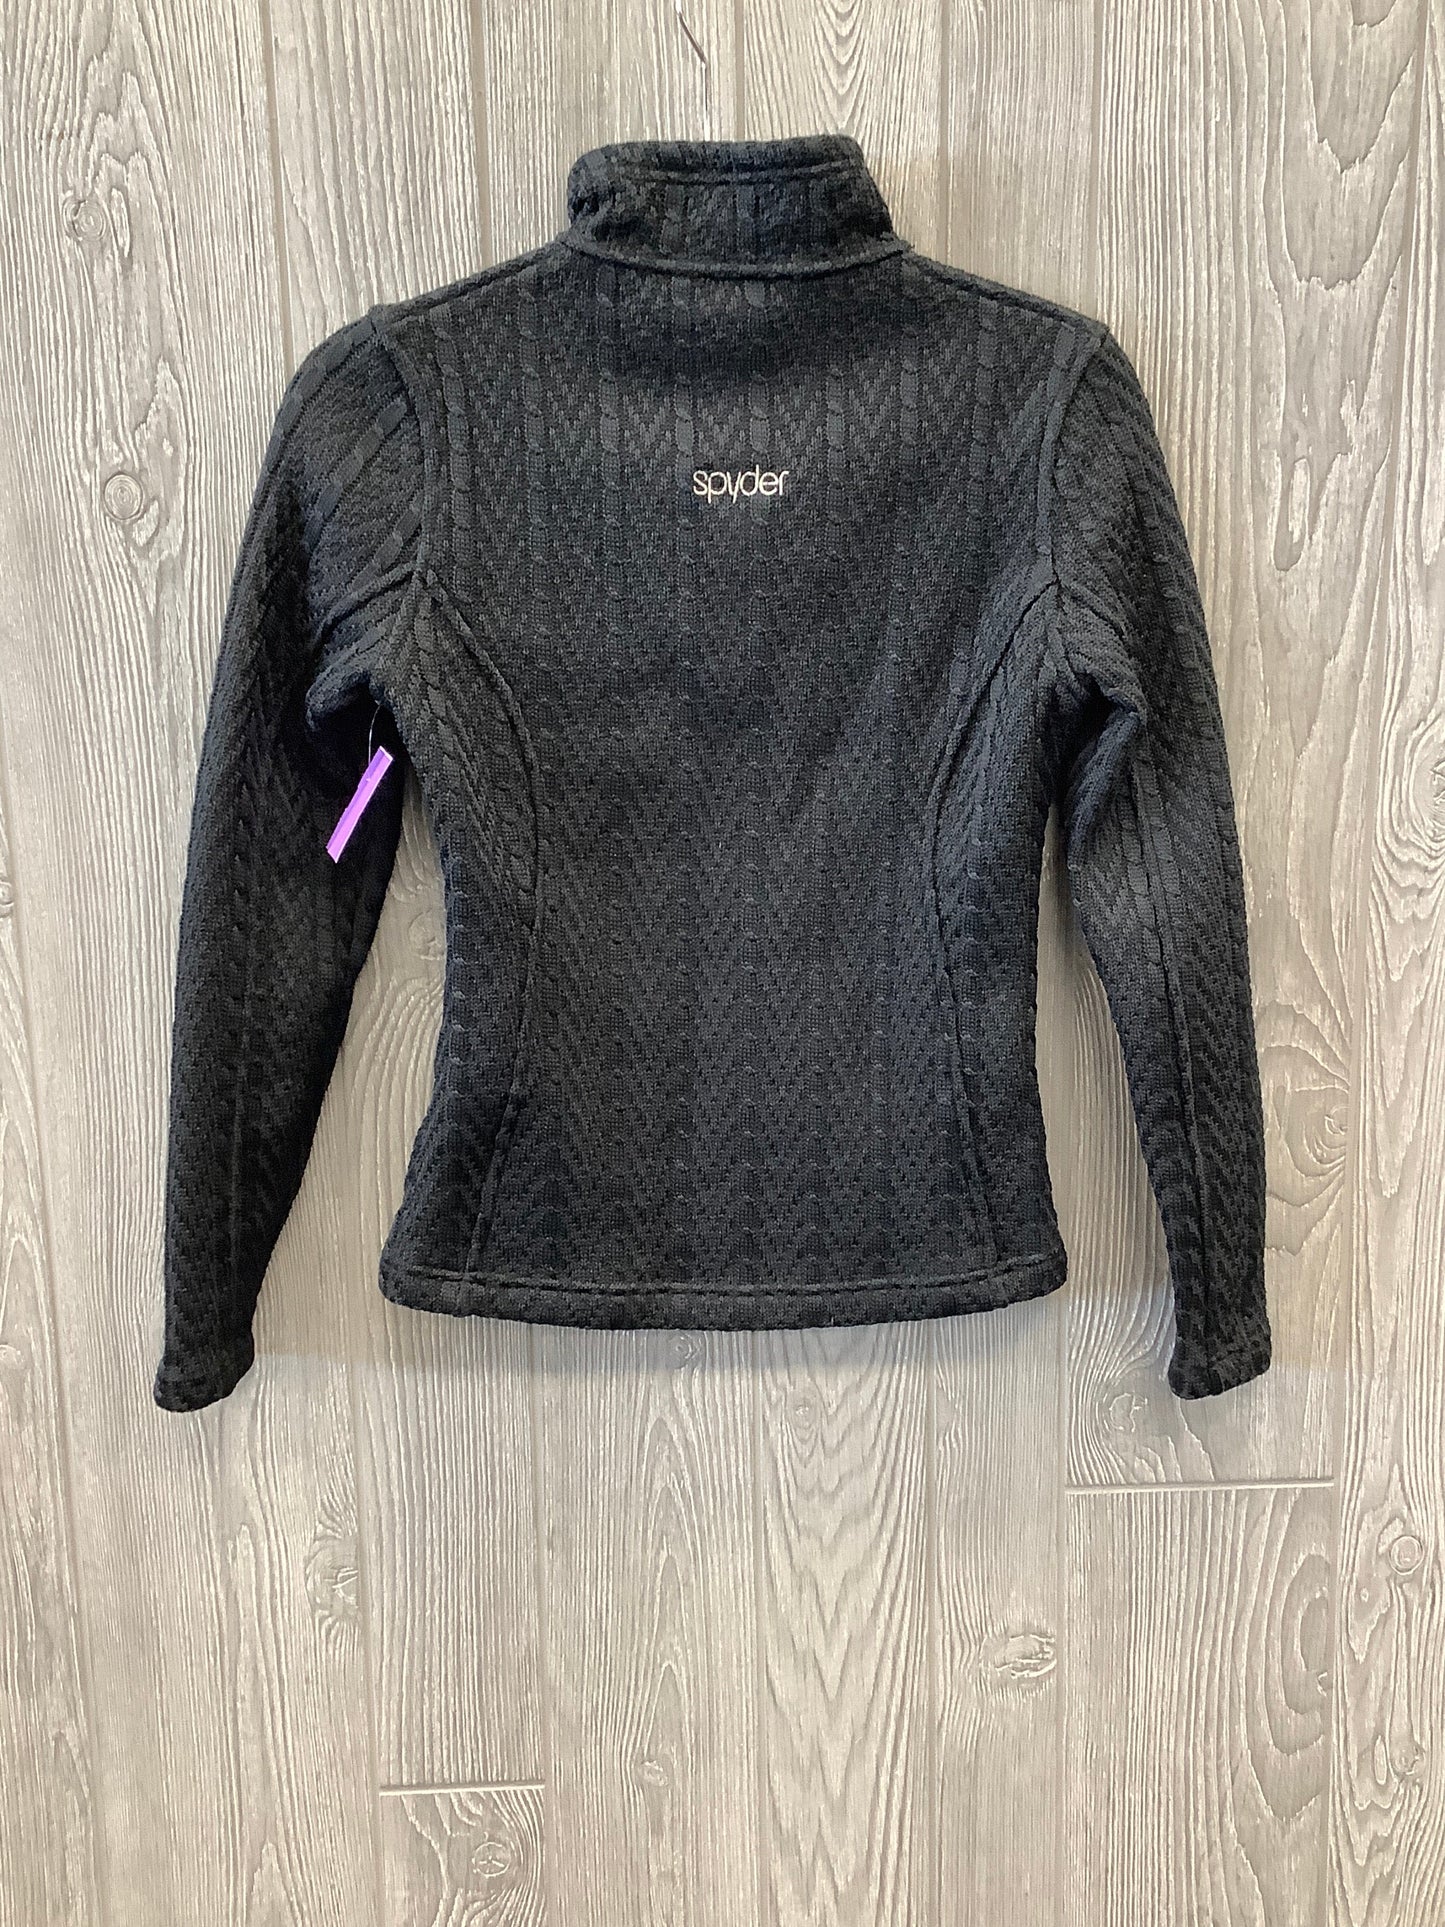 Black Athletic Jacket Spyder, Size Xs